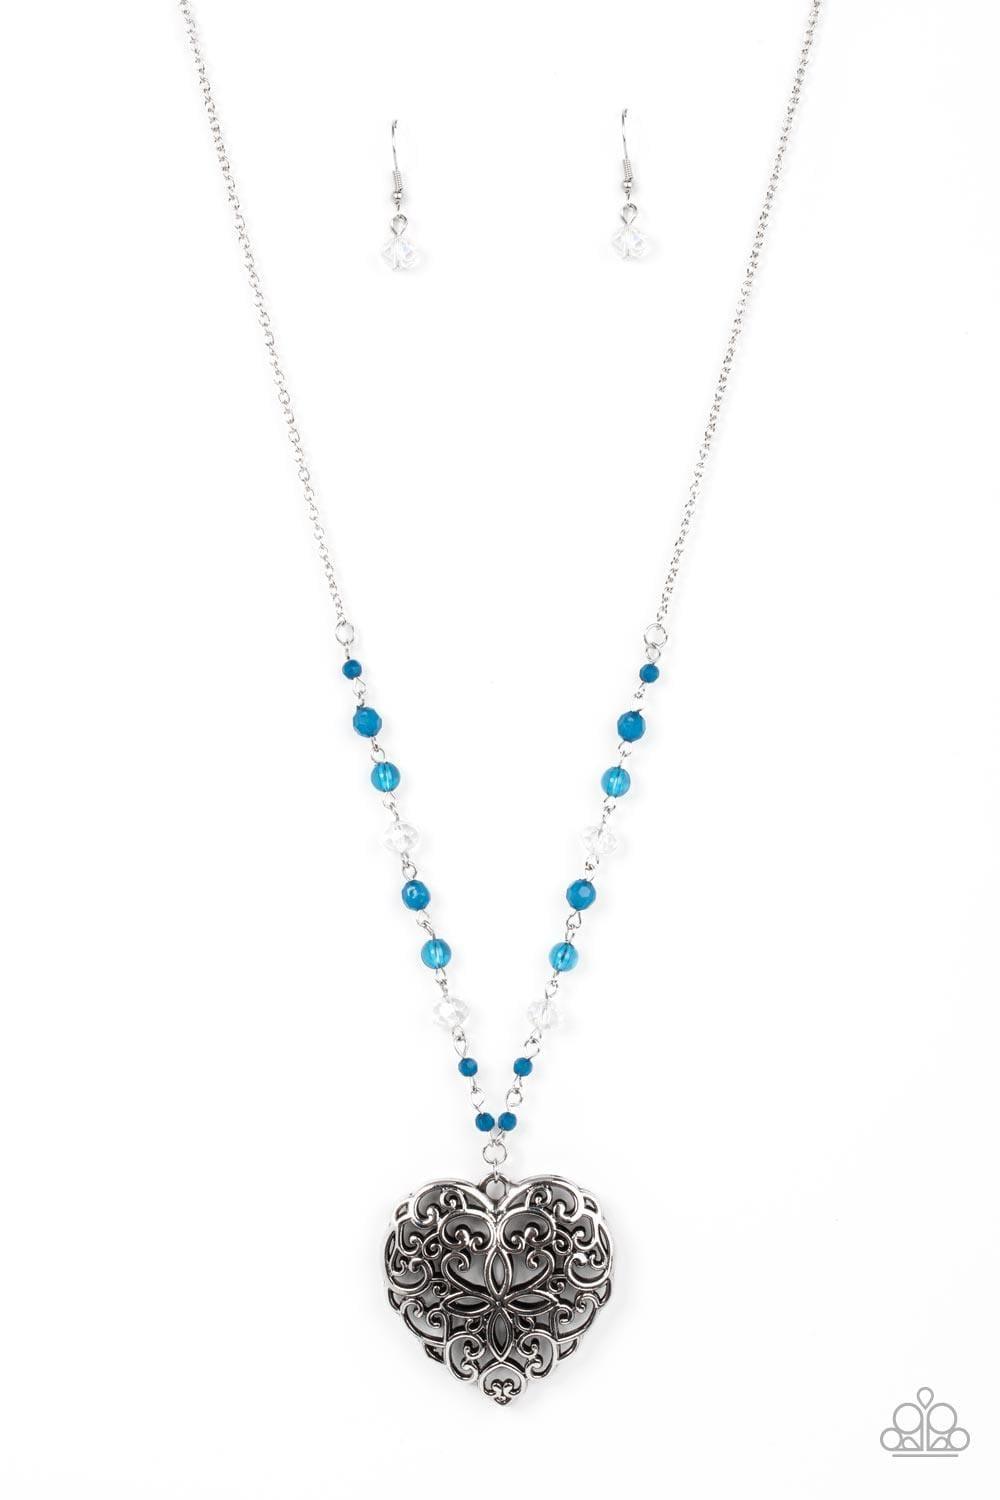 Paparazzi Accessories - Doting Devotion - Blue Necklace - Bling by JessieK